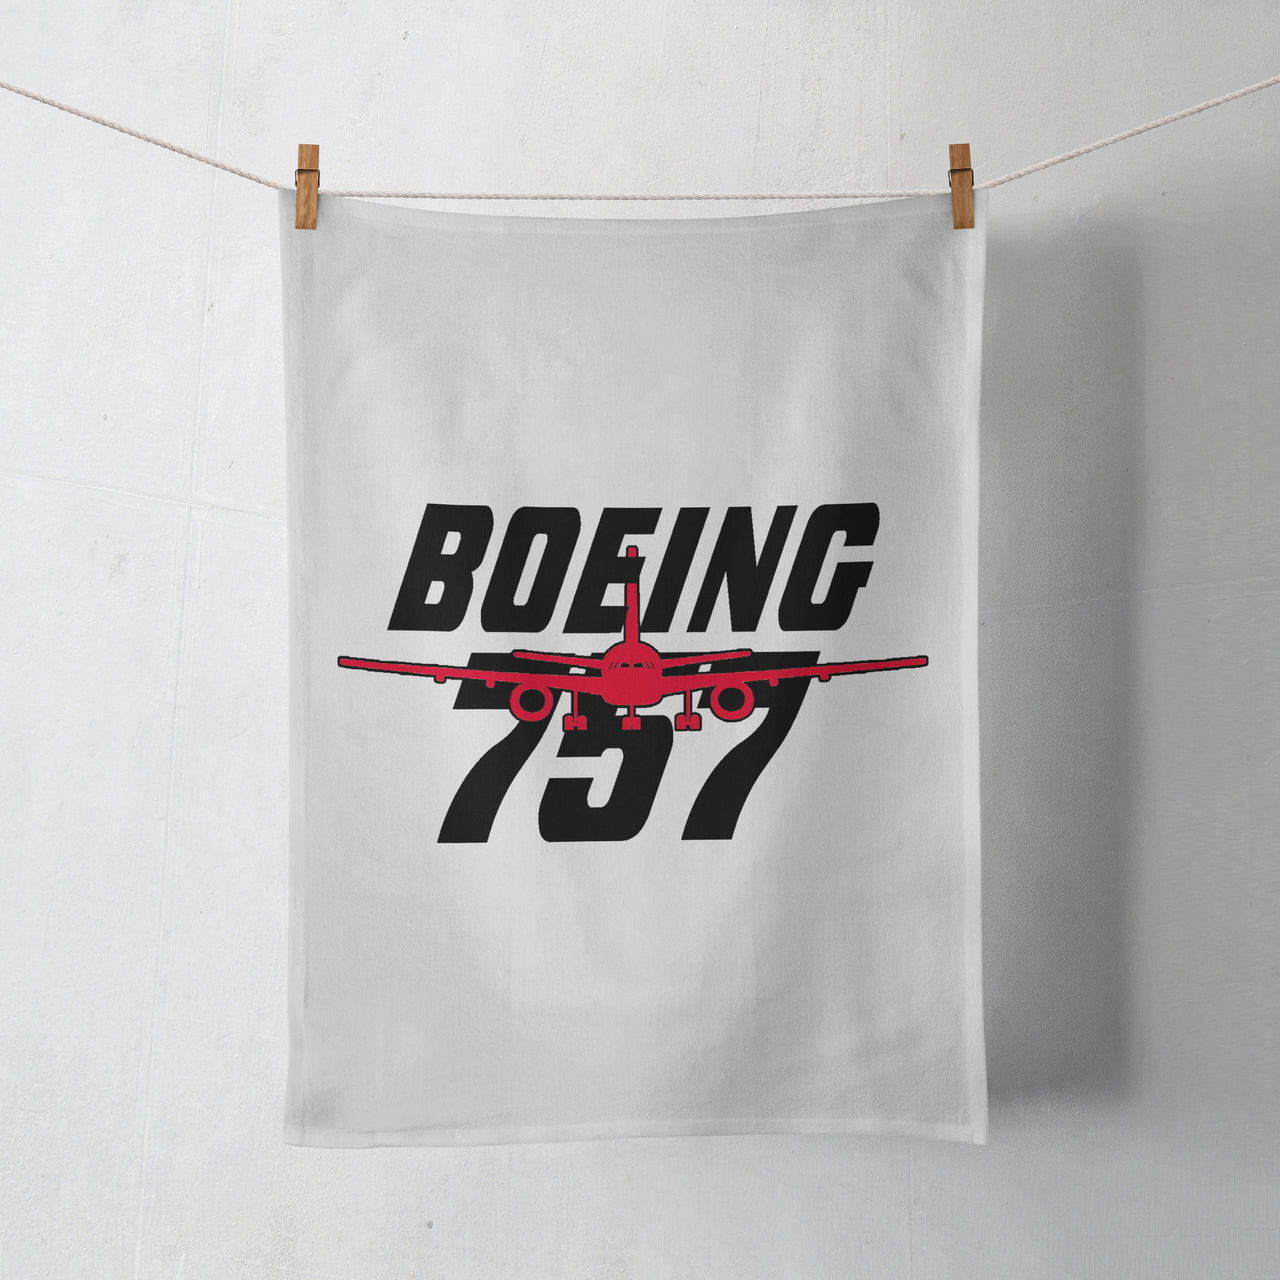 Amazing Boeing 757 Designed Towels